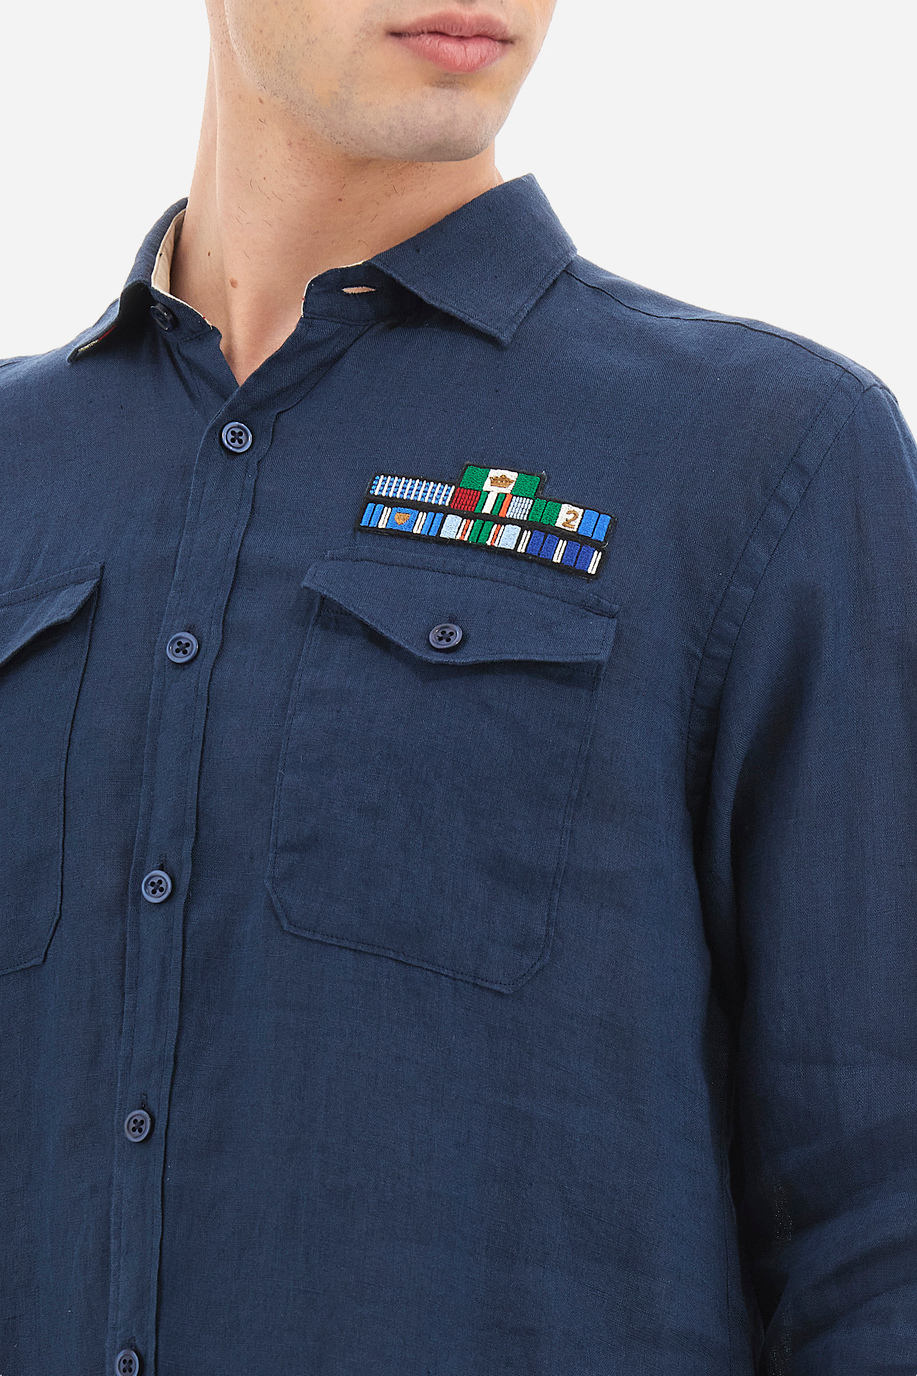 Men's regular fit 100% linen long-sleeved shirt - Viviano - Guards - England | La Martina - Official Online Shop